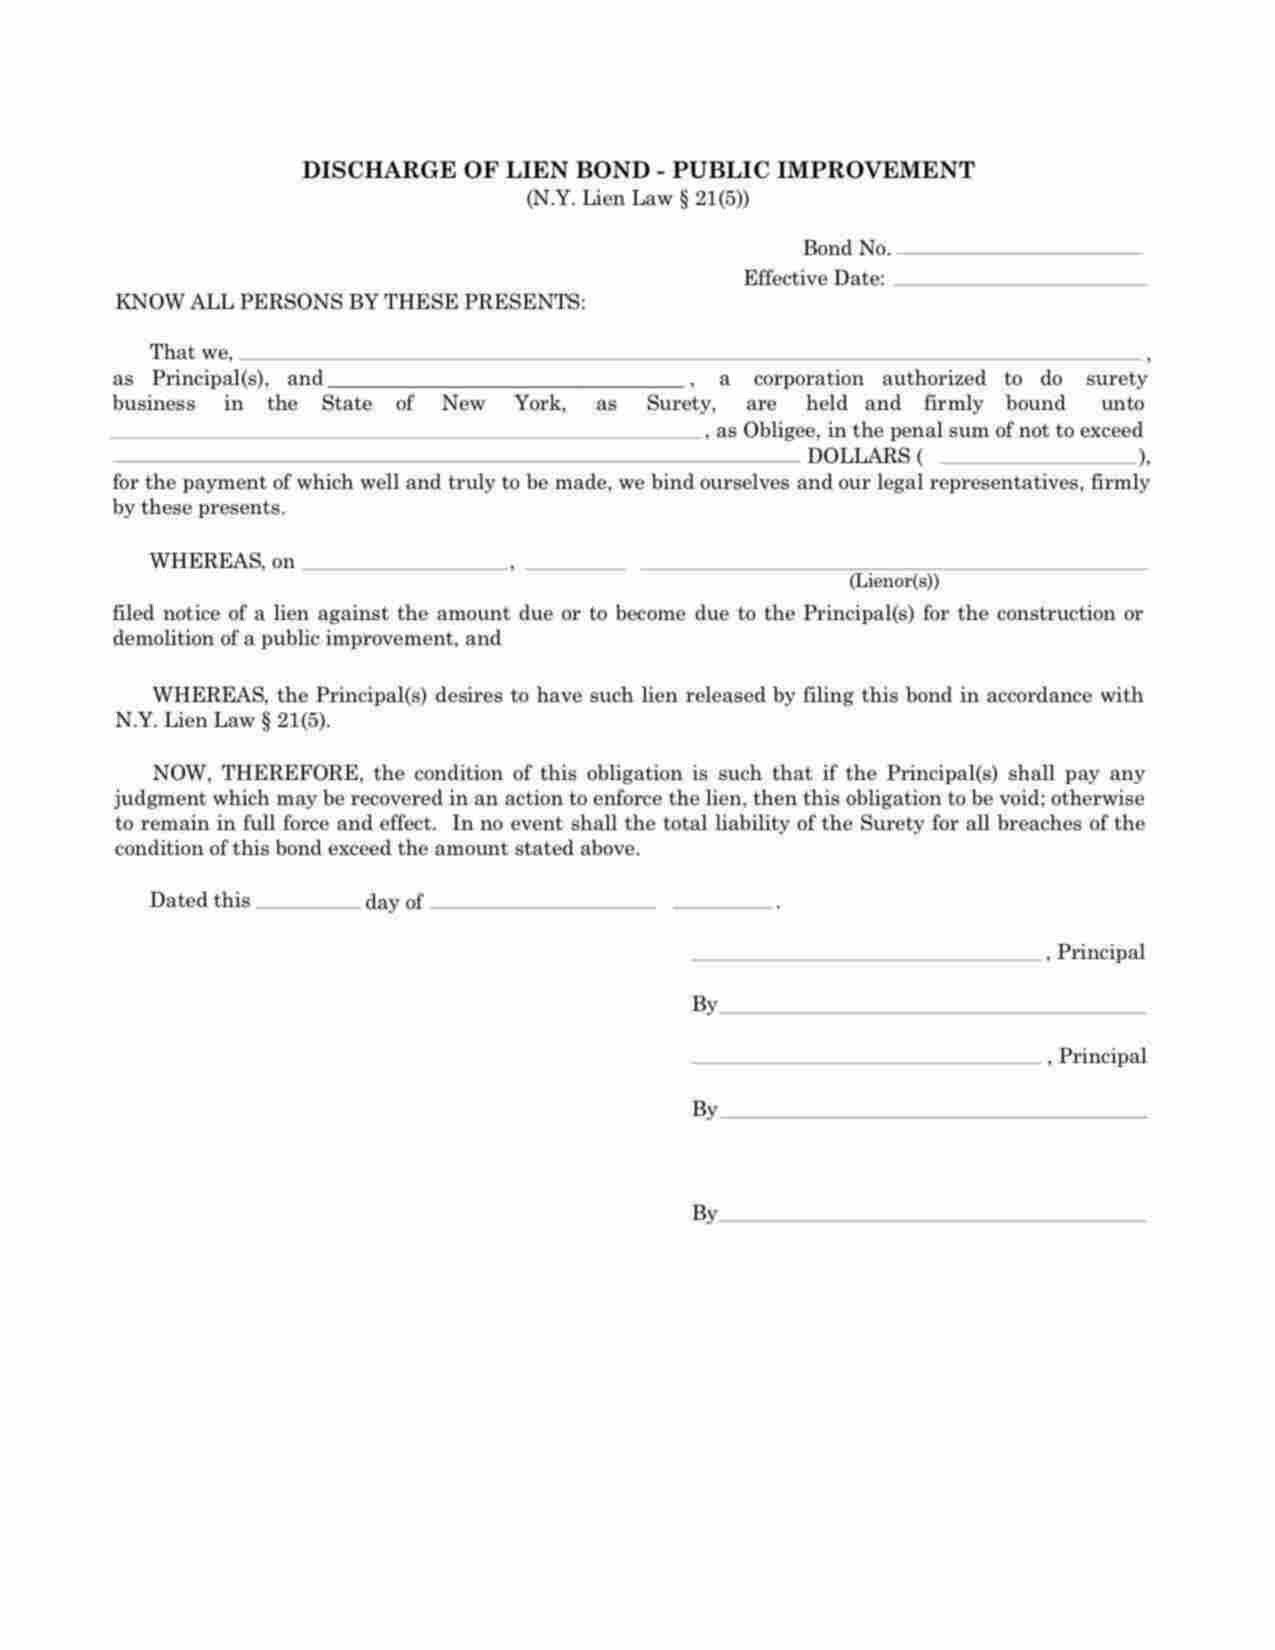 New York Discharge of Lien - Public Improvement Bond Form